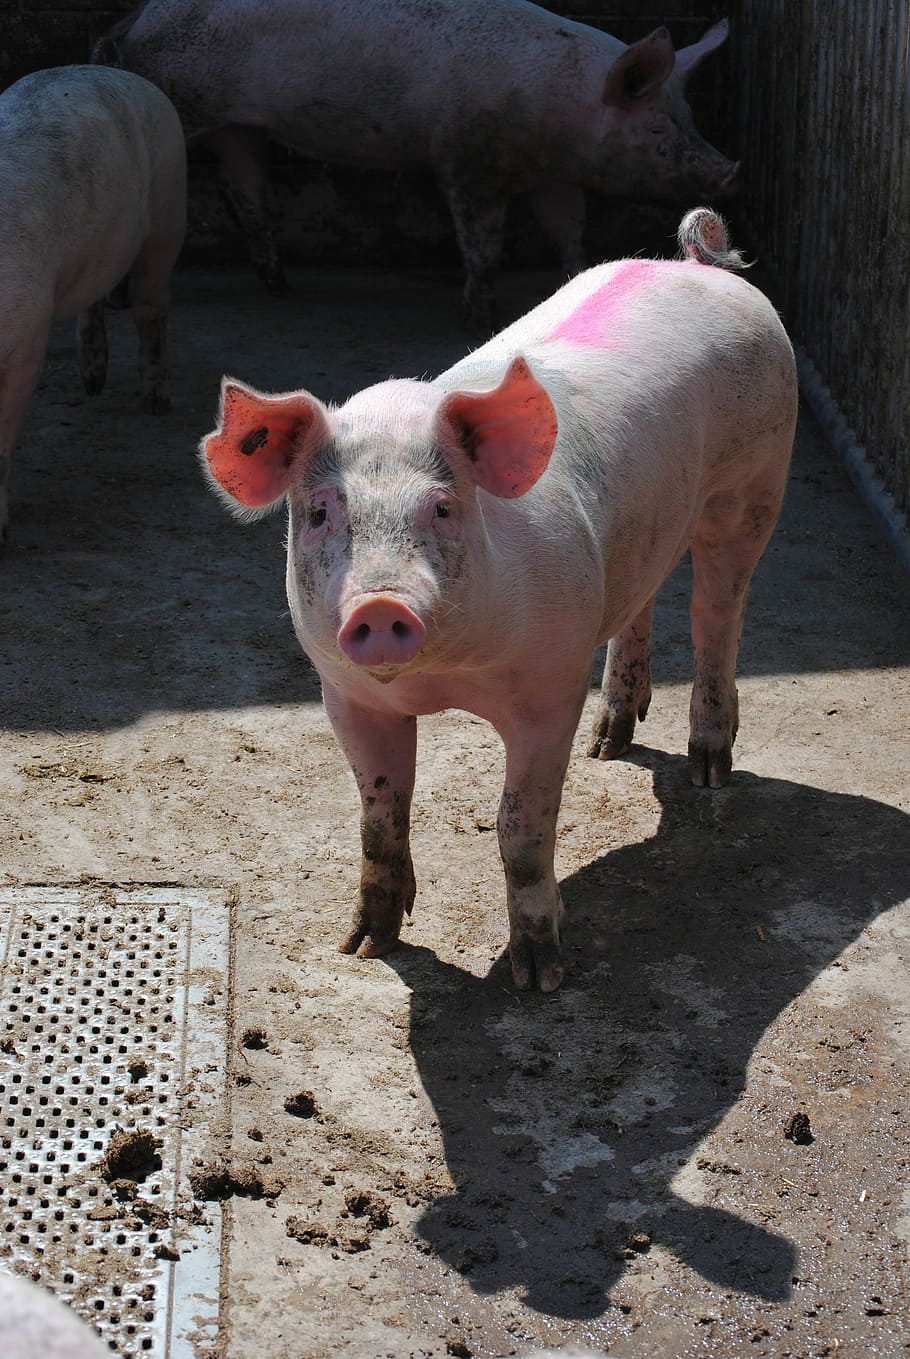 Pig, Sow, Breeding, Livestock, pig breeding, animal portrait, piglet, animal themes, pink color, animal